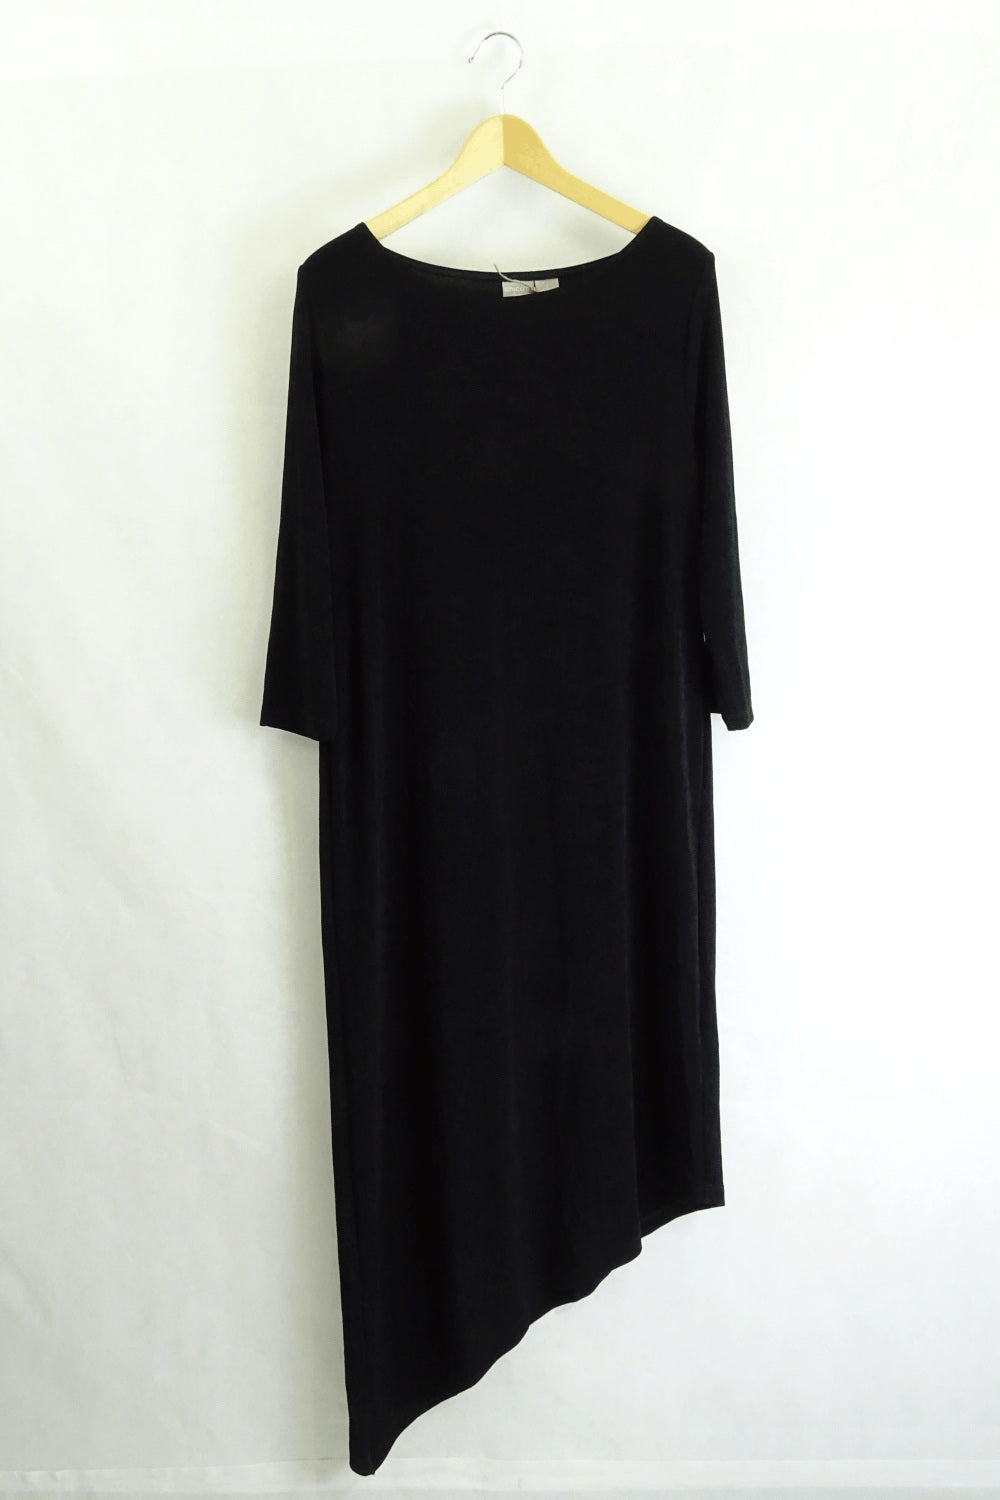 Chicos Black Dress 1 (AU8 - 10)